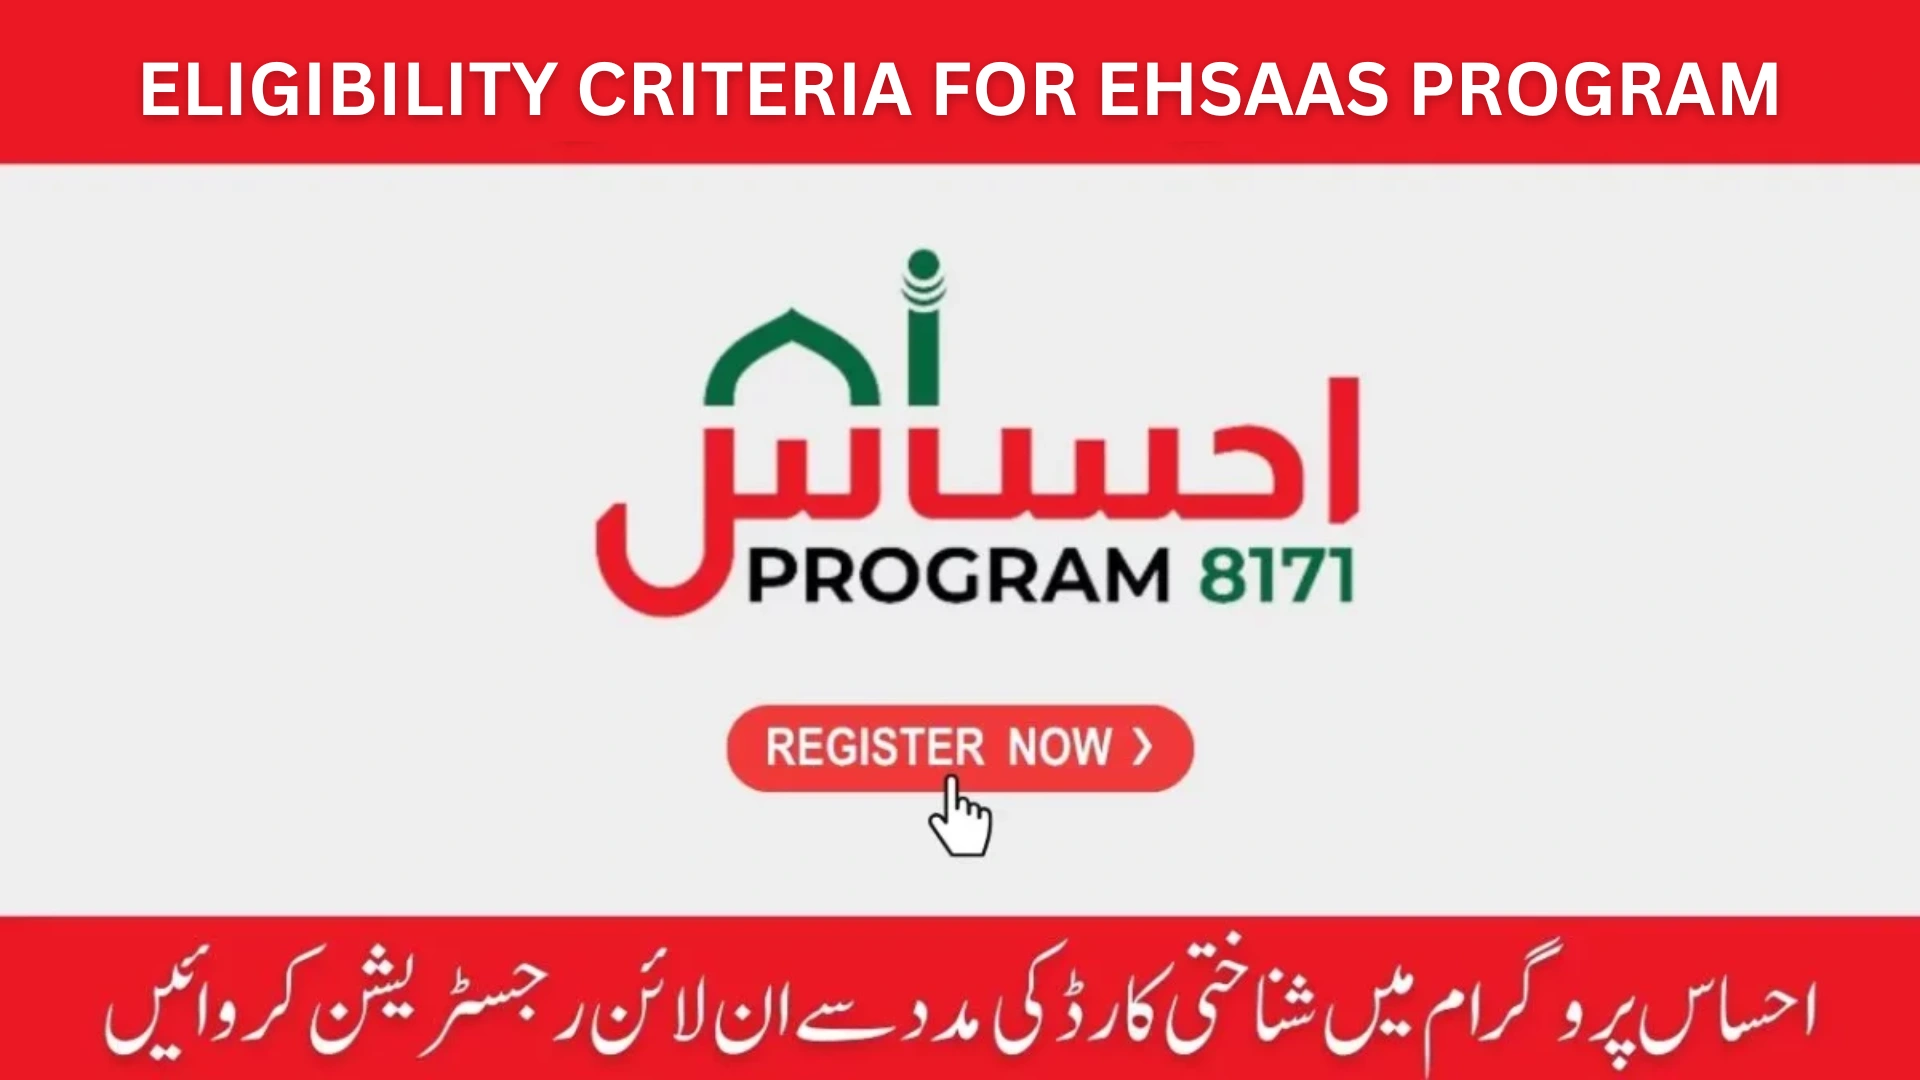 Eligibility Criteria for Ehsaas Program